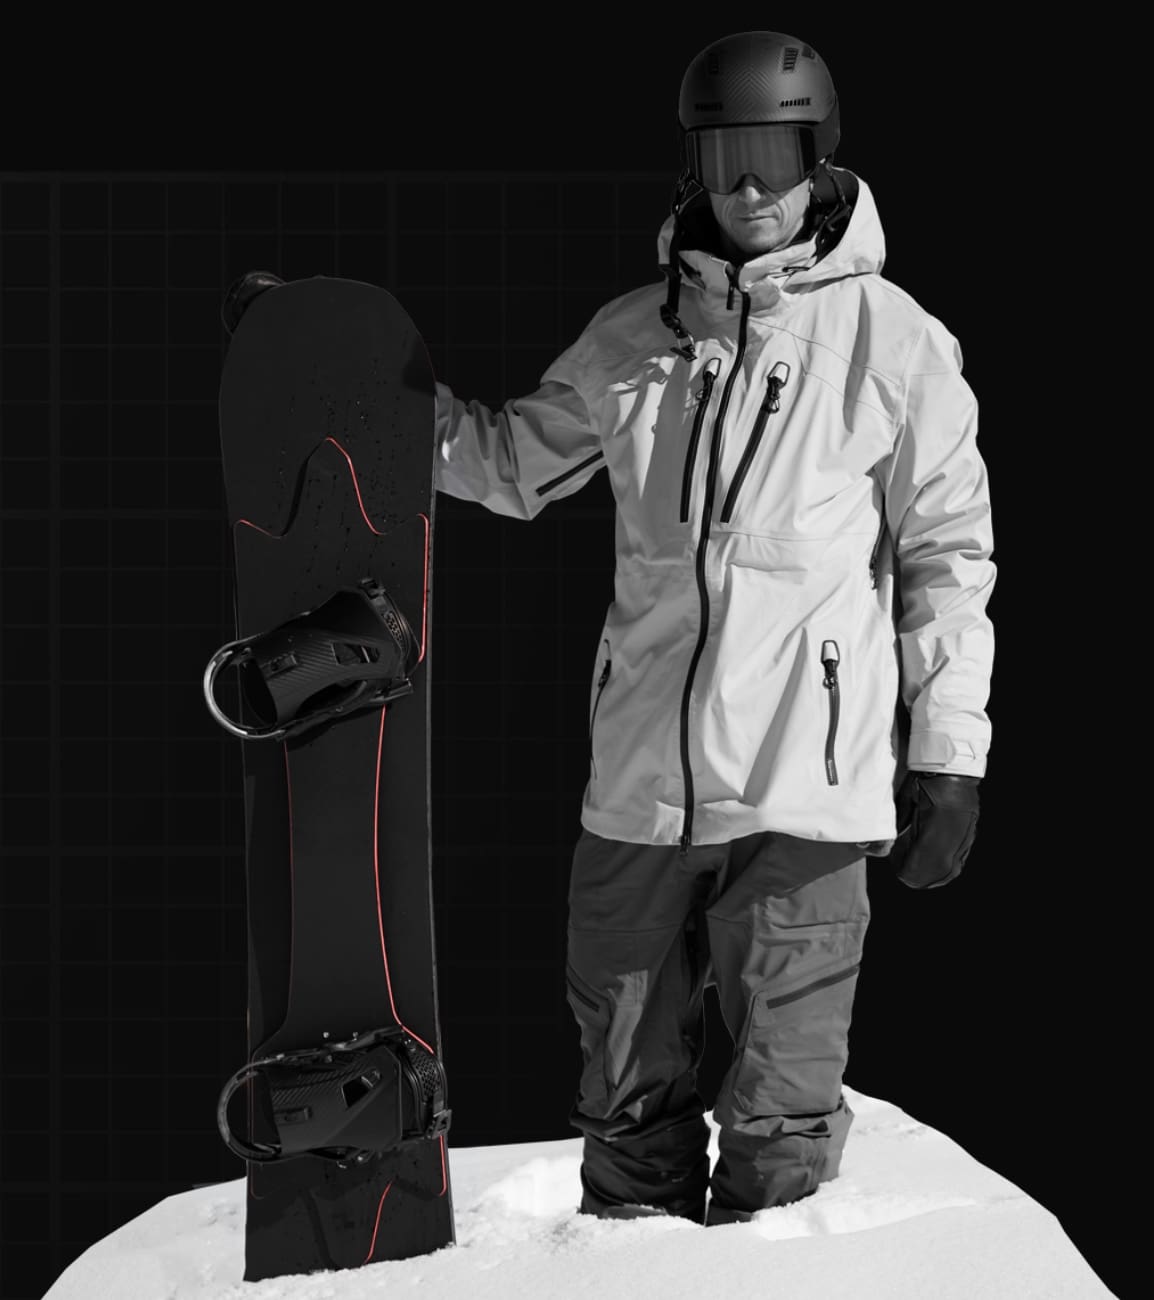 Overtreding Versnipperd Verdikken Check Out This New “Double Decker” Snowboard Design